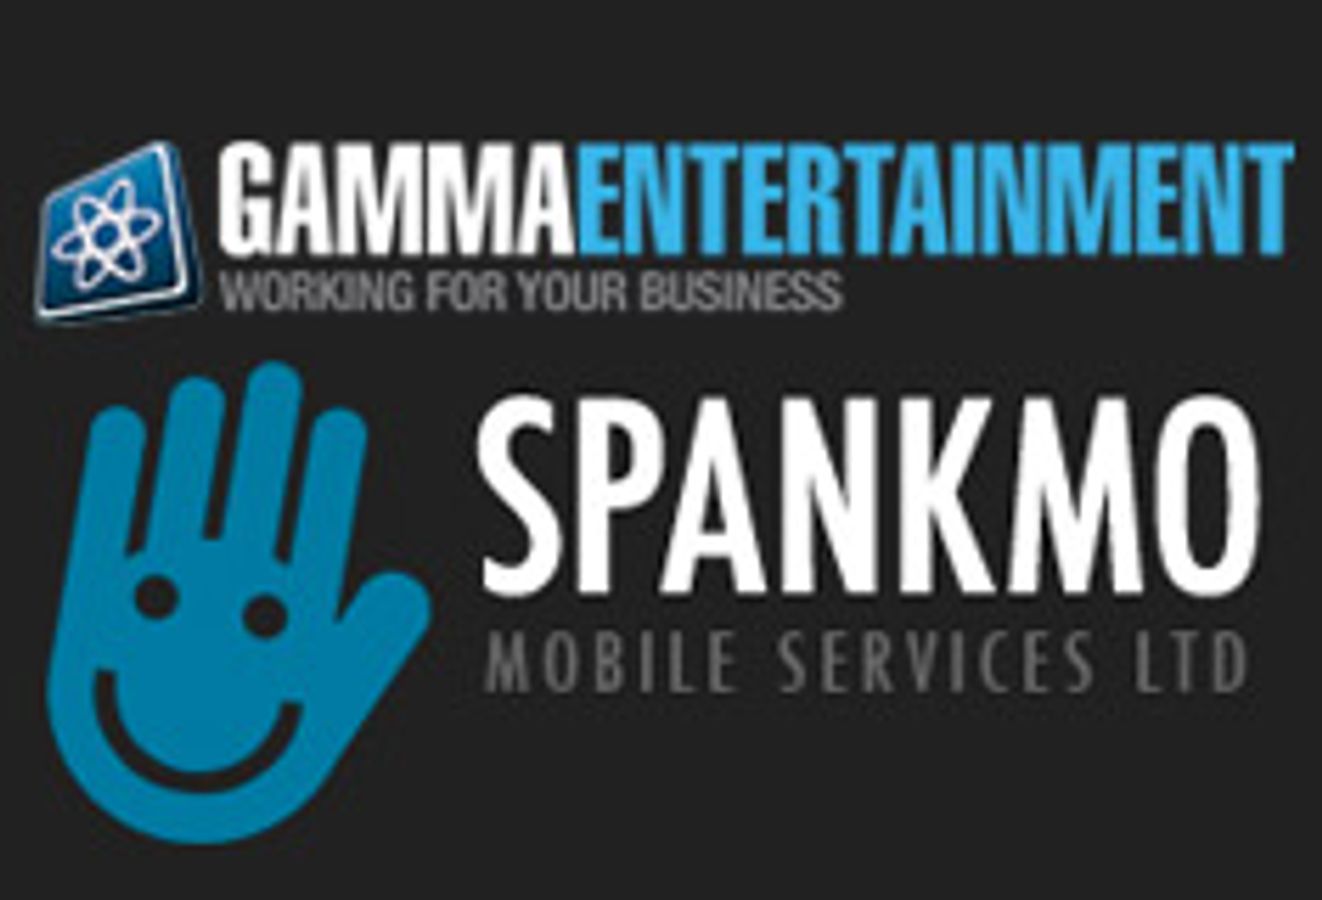 Gamma-Spankmo